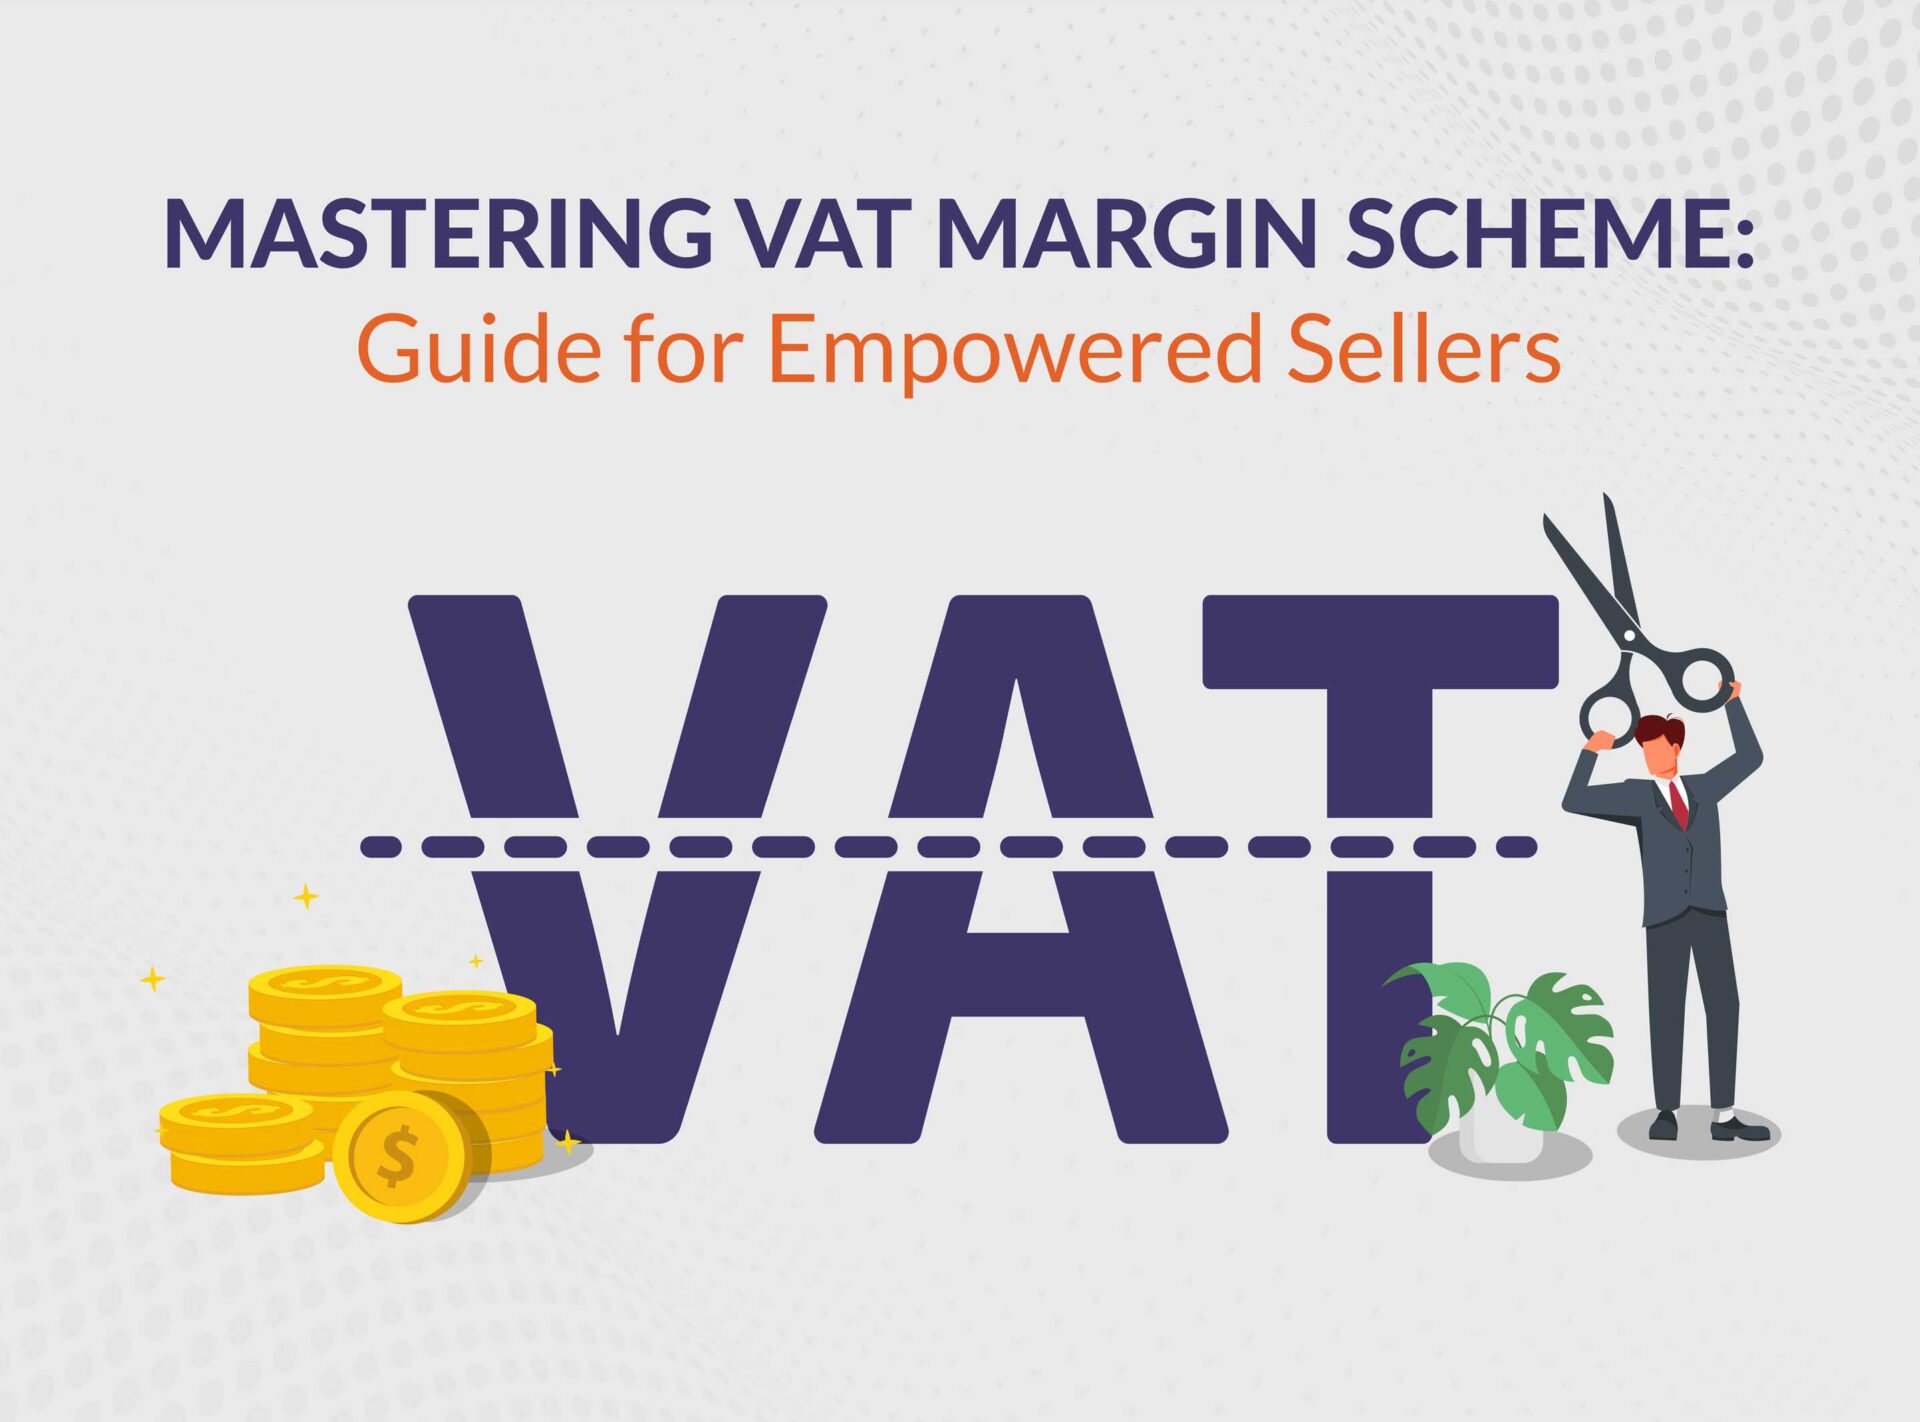 Mastering VAT Margin Scheme: Guide for Empowered Sellers